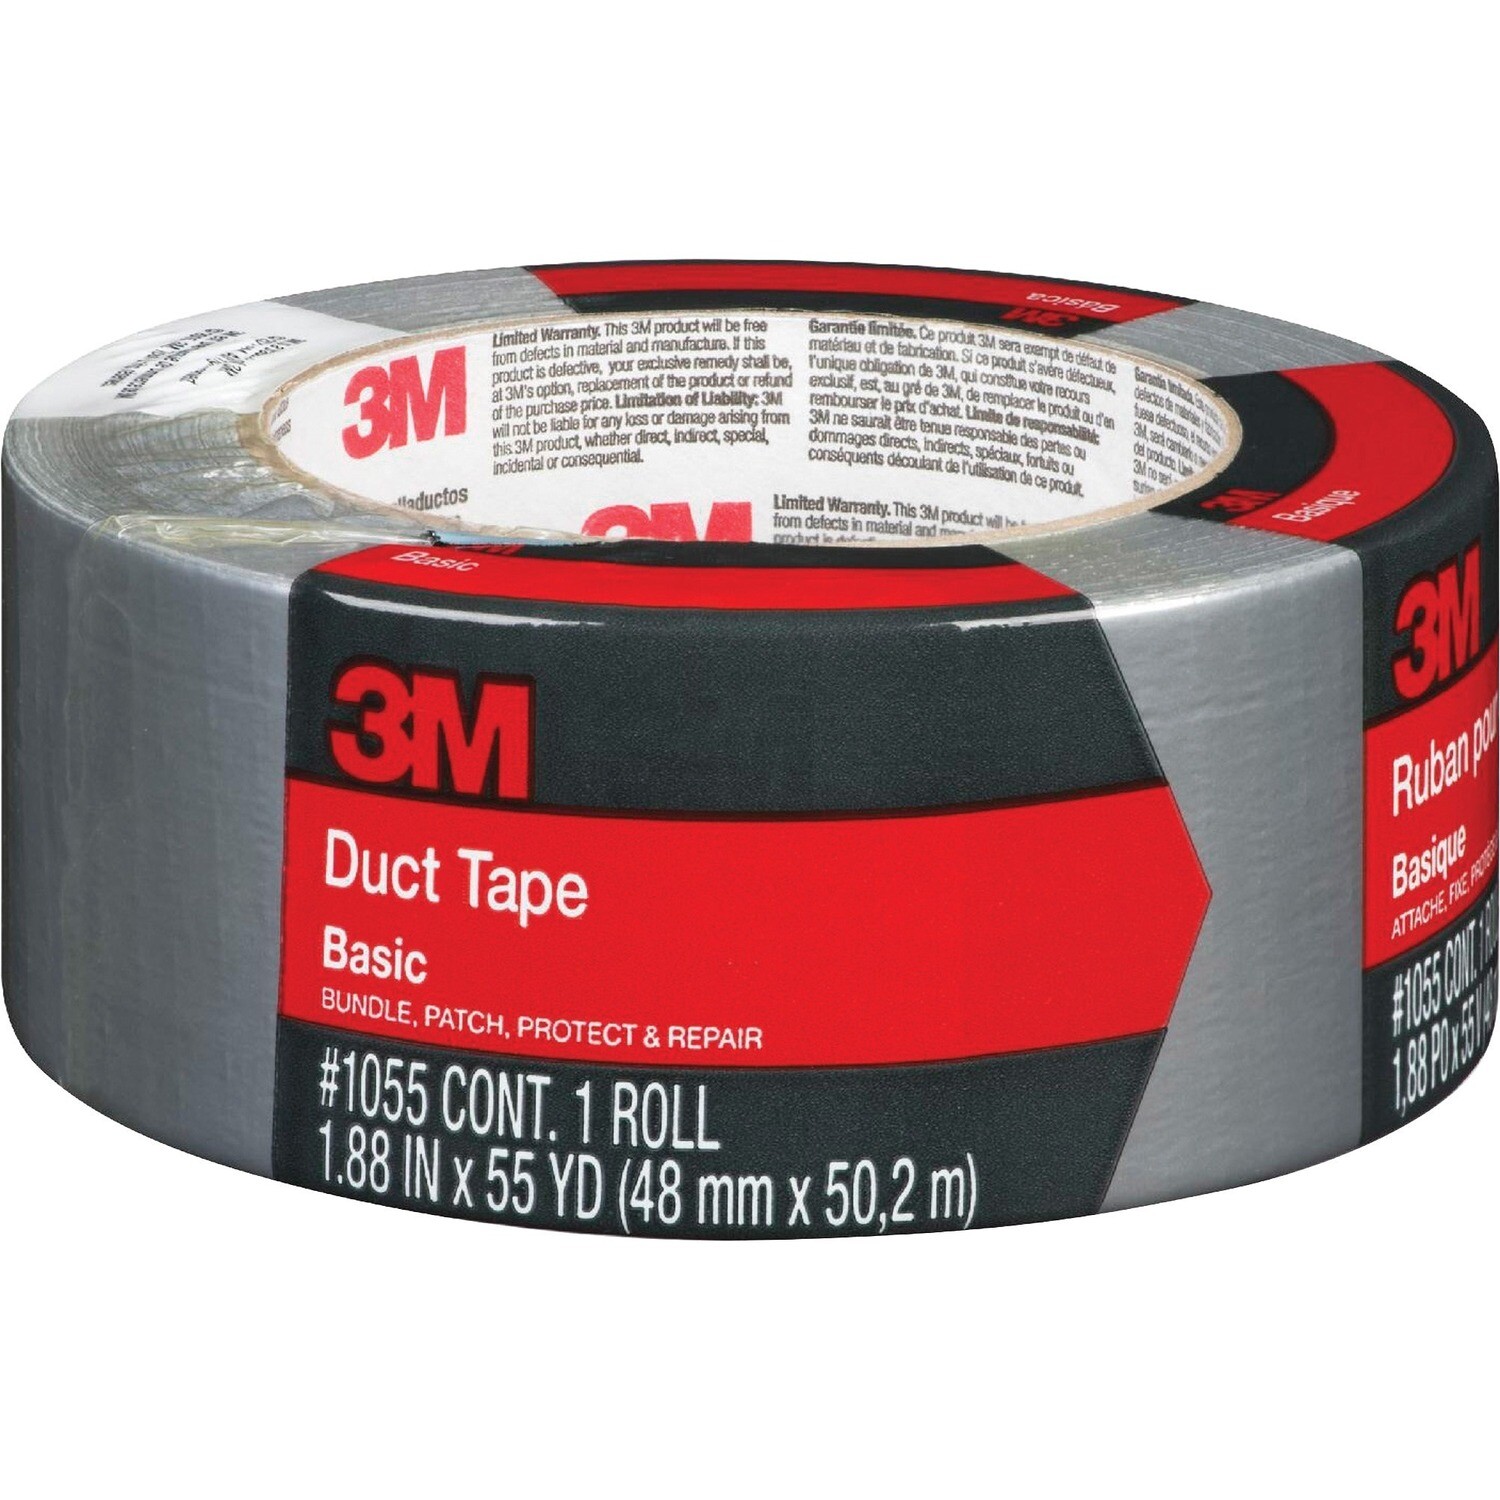 Tape, Duct 48mm x 50.2m, 3M